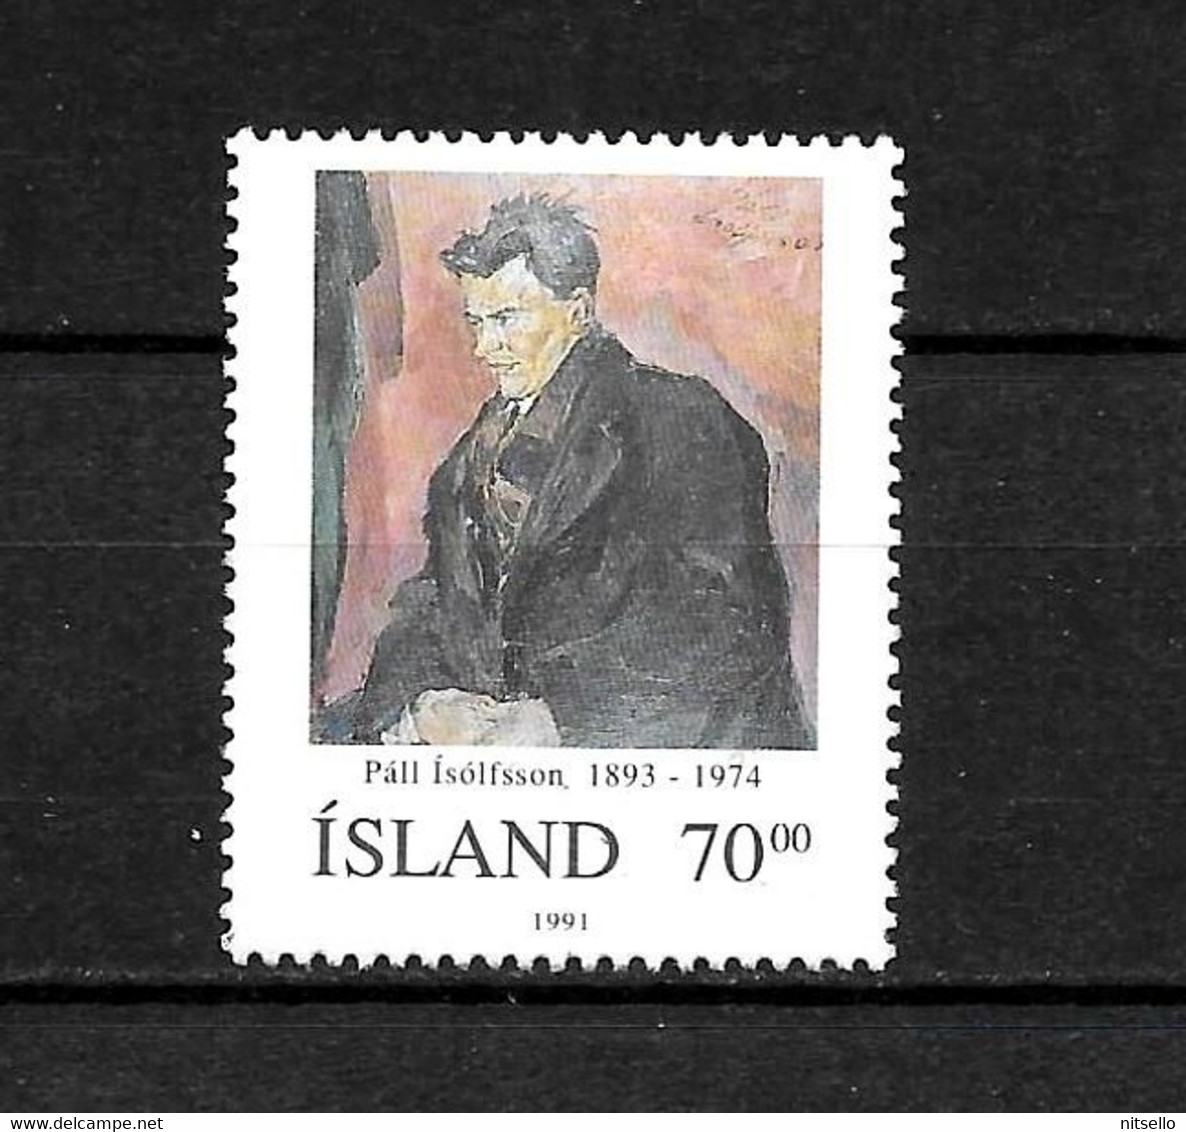 LOTE 2235  ///  ISLANDIA  YVERT Nº: 705  ¡¡¡ OFERTA - LIQUIDATION - JE LIQUIDE !!! - Used Stamps